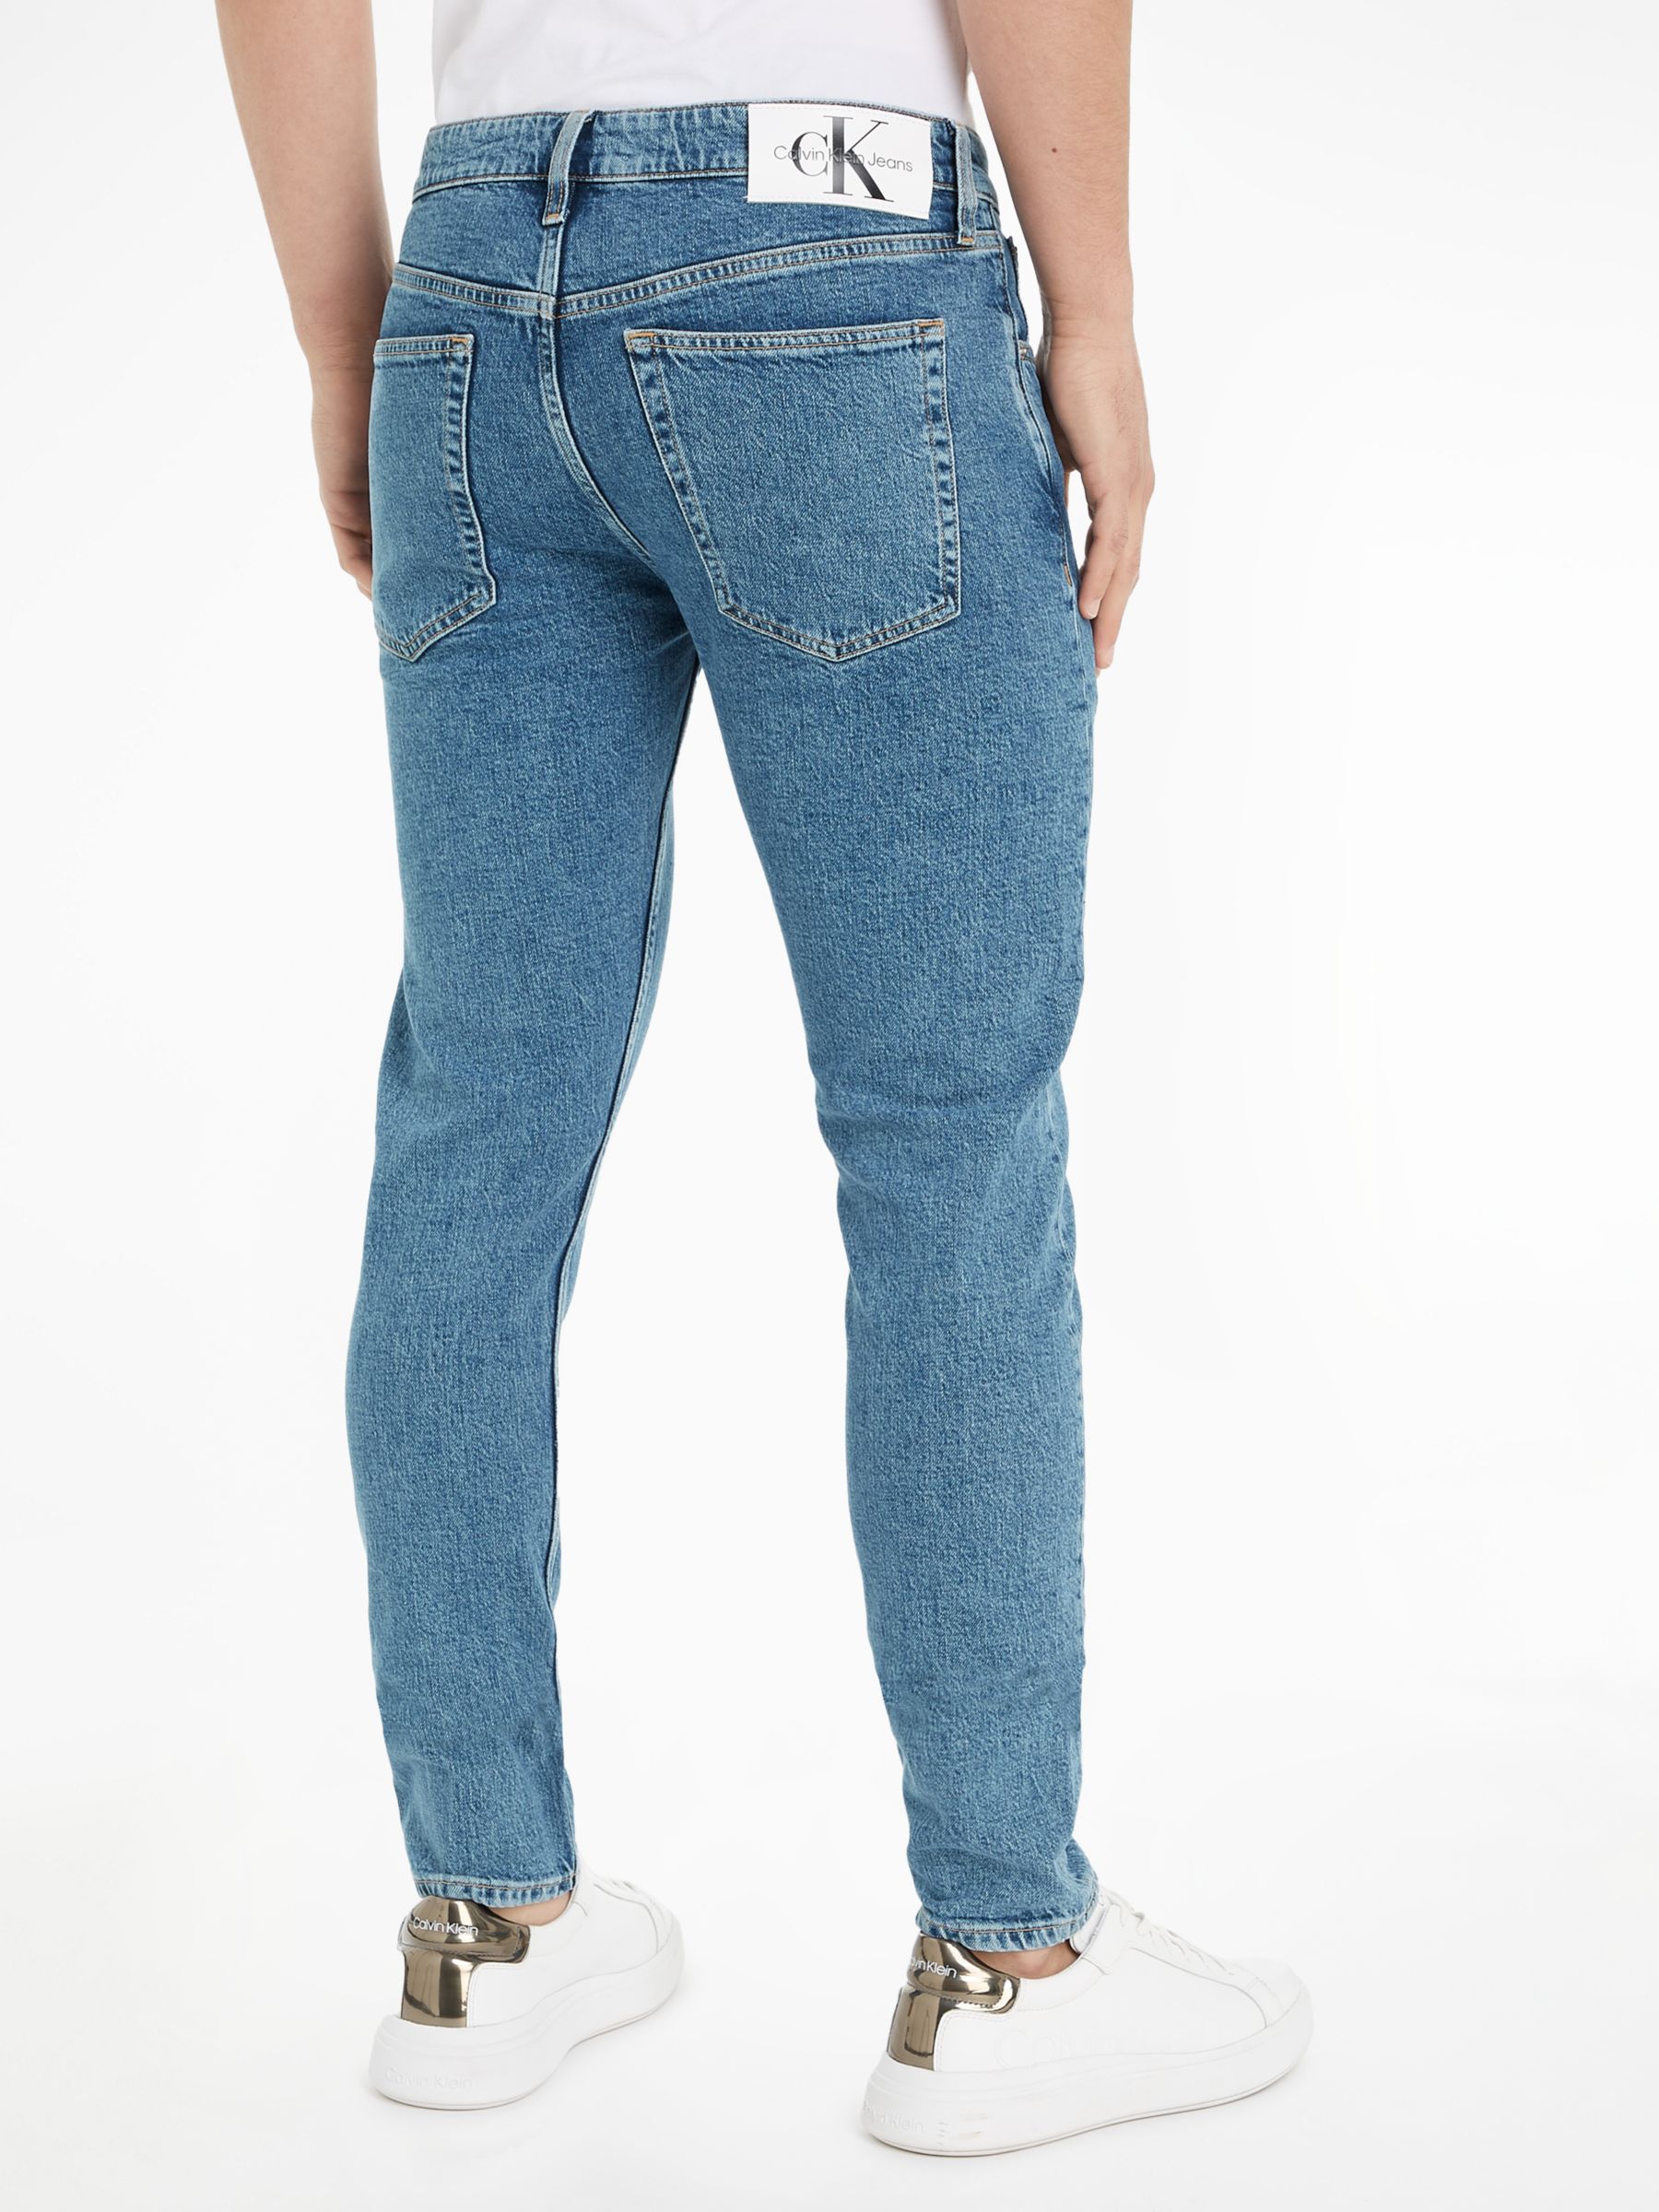 Buy Calvin Klein Jeans Slim Taper Jeans, Light Denim Online at johnlewis.com